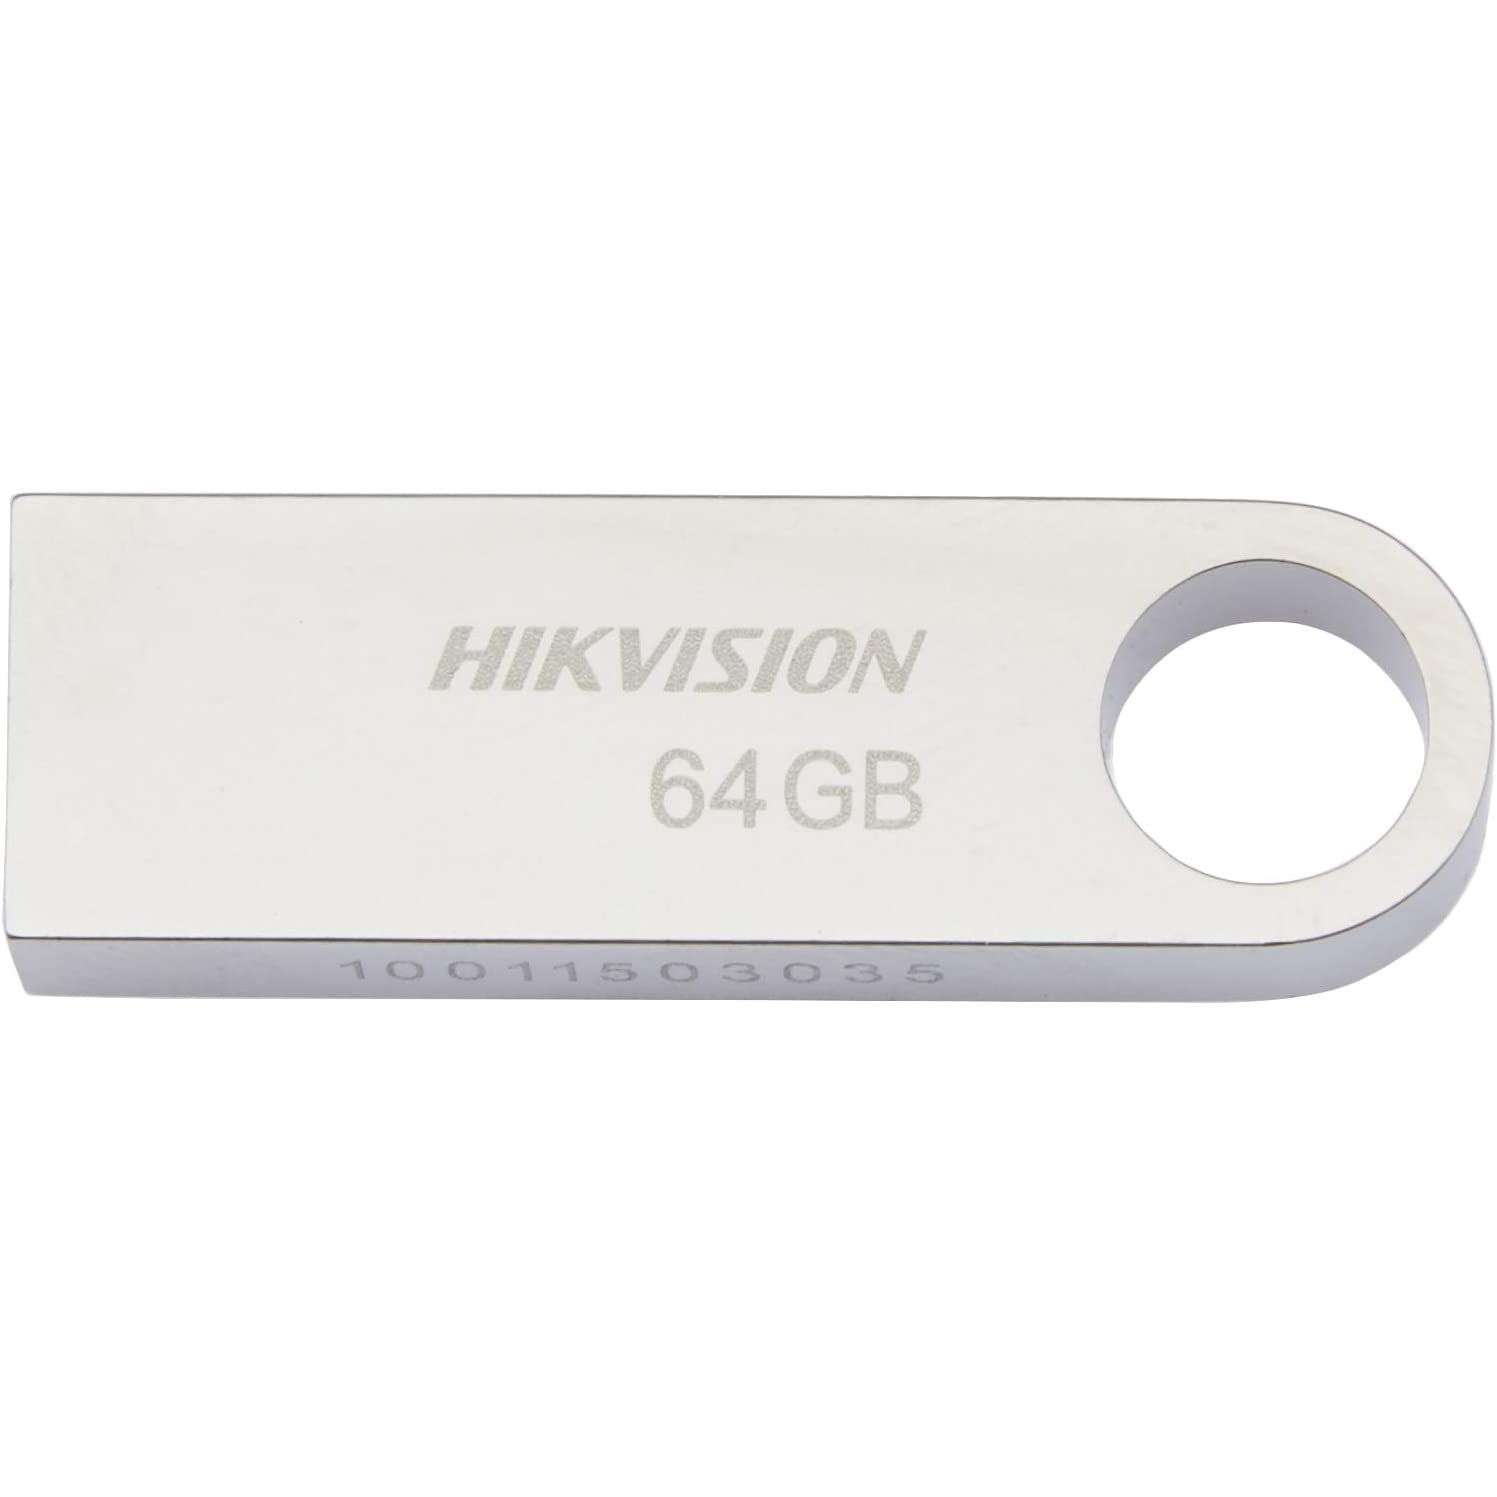 HIKVISION%2064GB%20USB2.0%20FLASH%20BELLEK%20HS-USB-M200